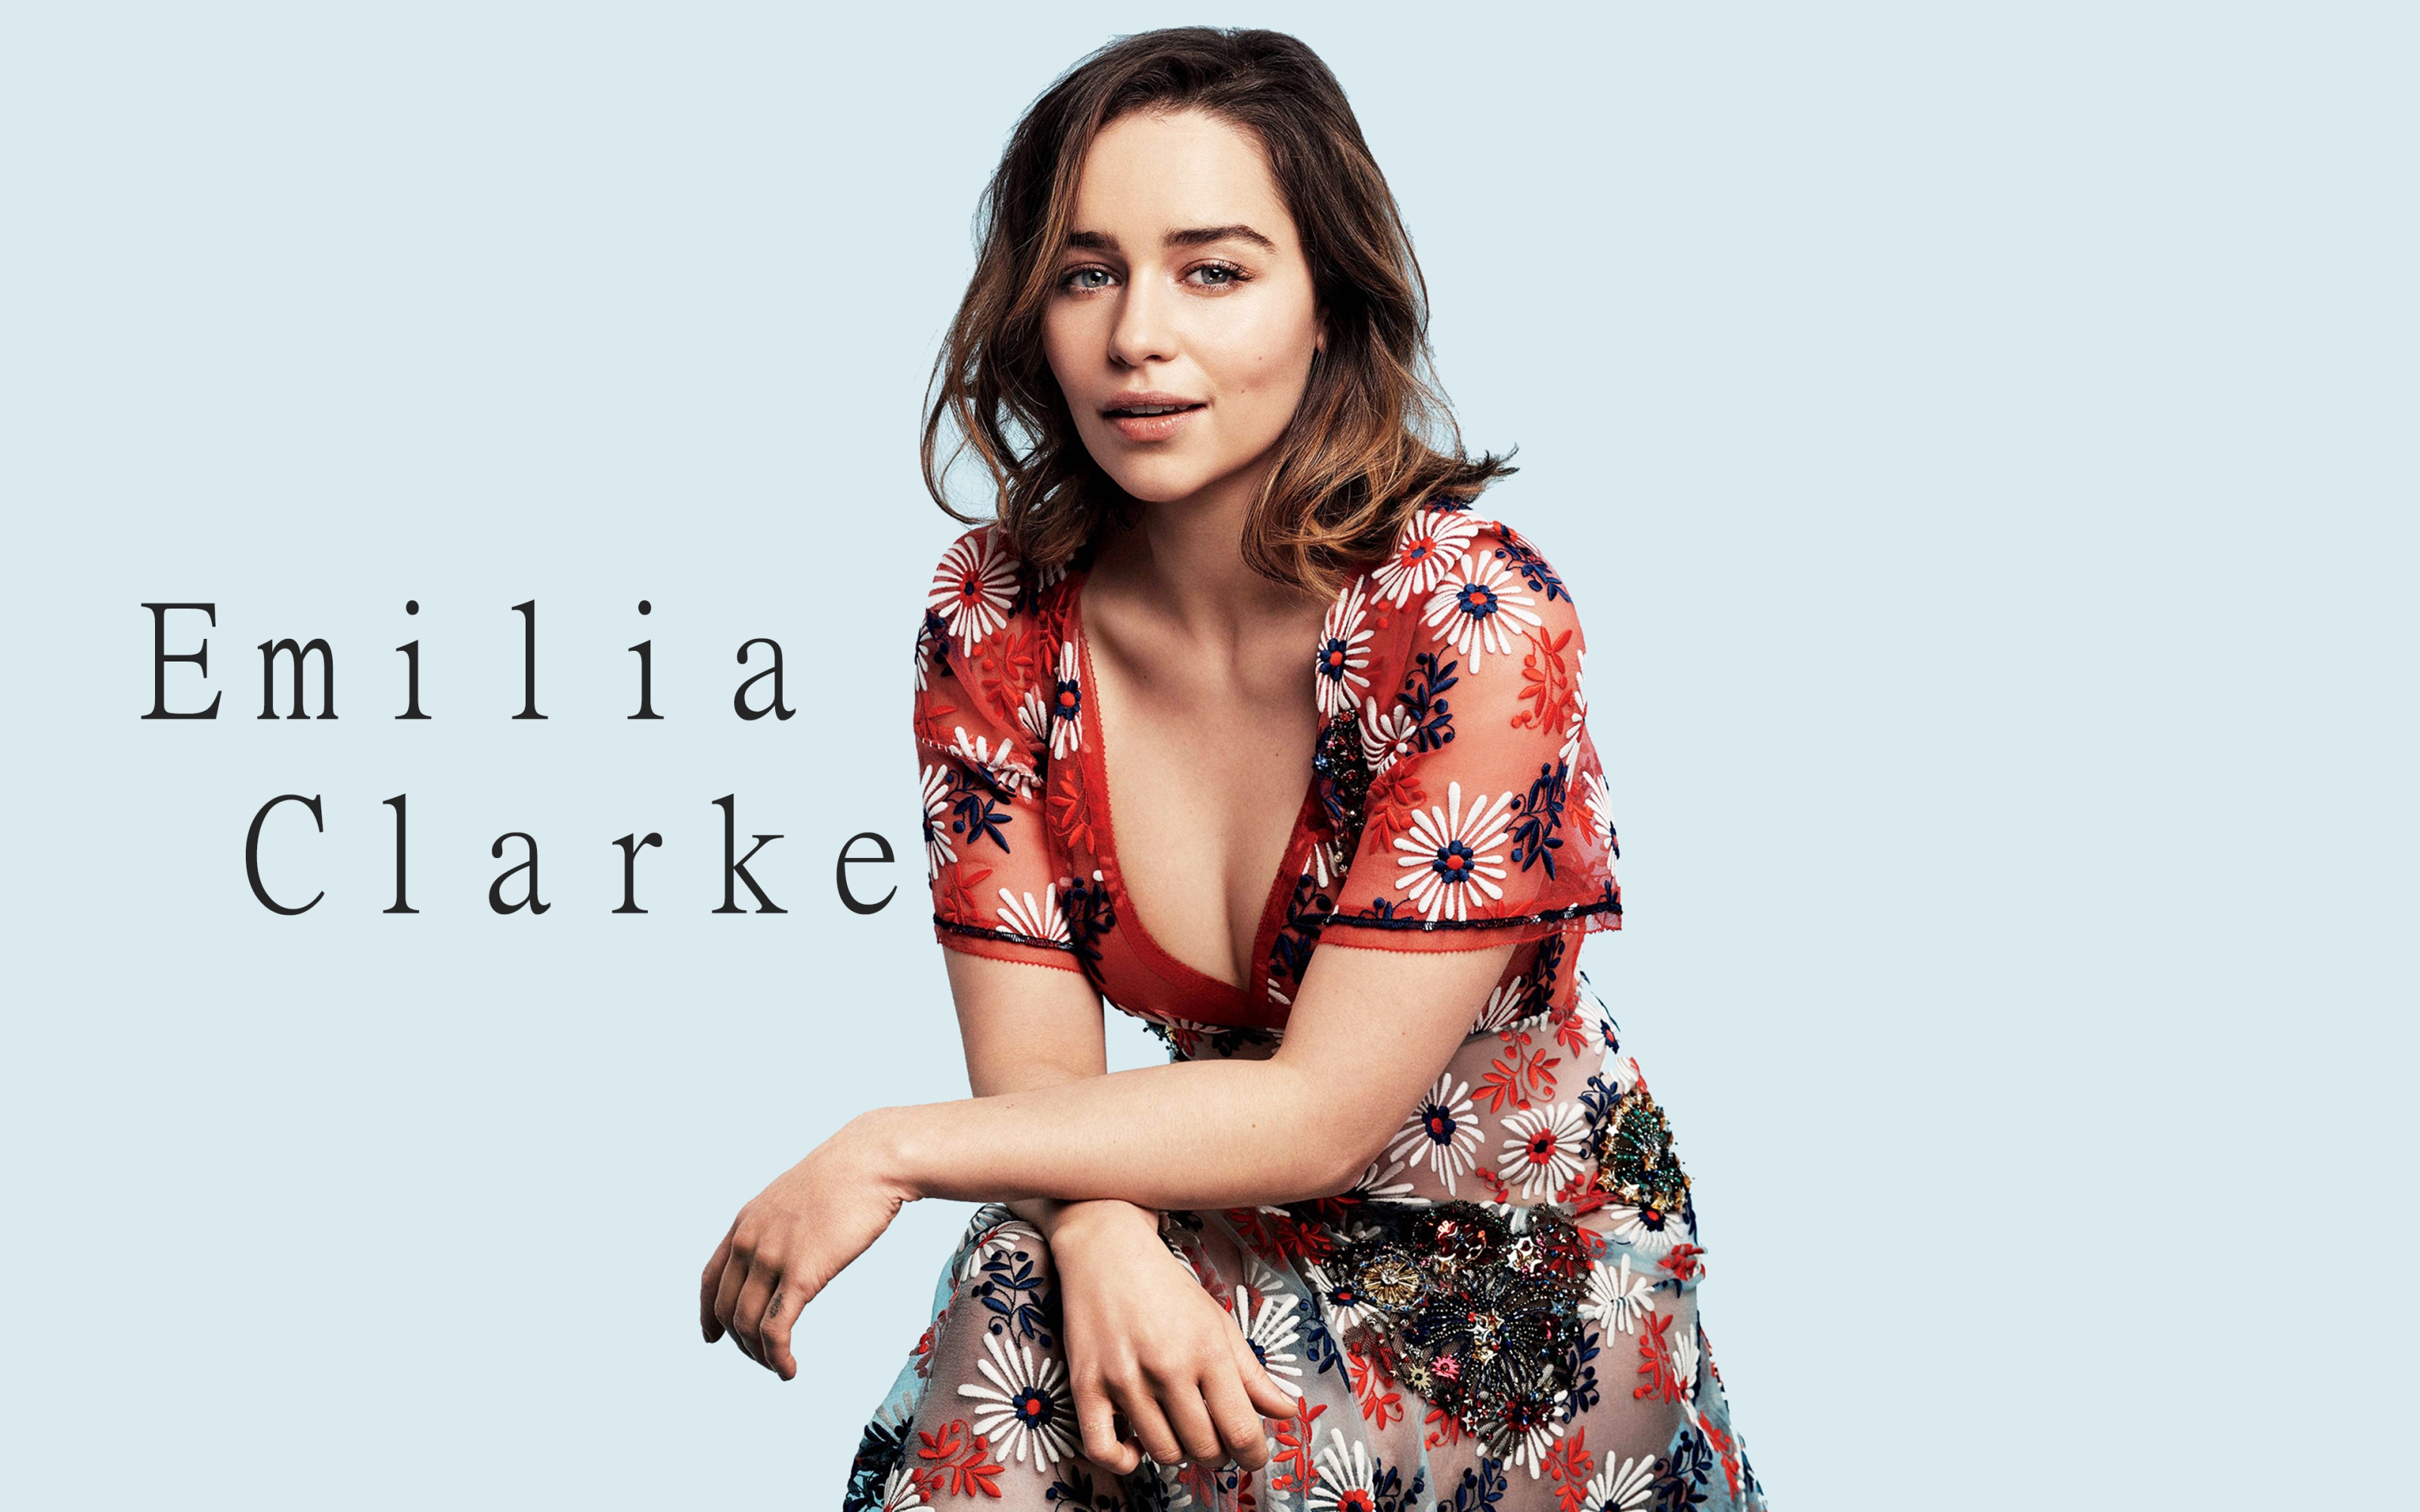 Emilia Clarke 2017 for 3200 x 2000 Wide Retina Display resolution